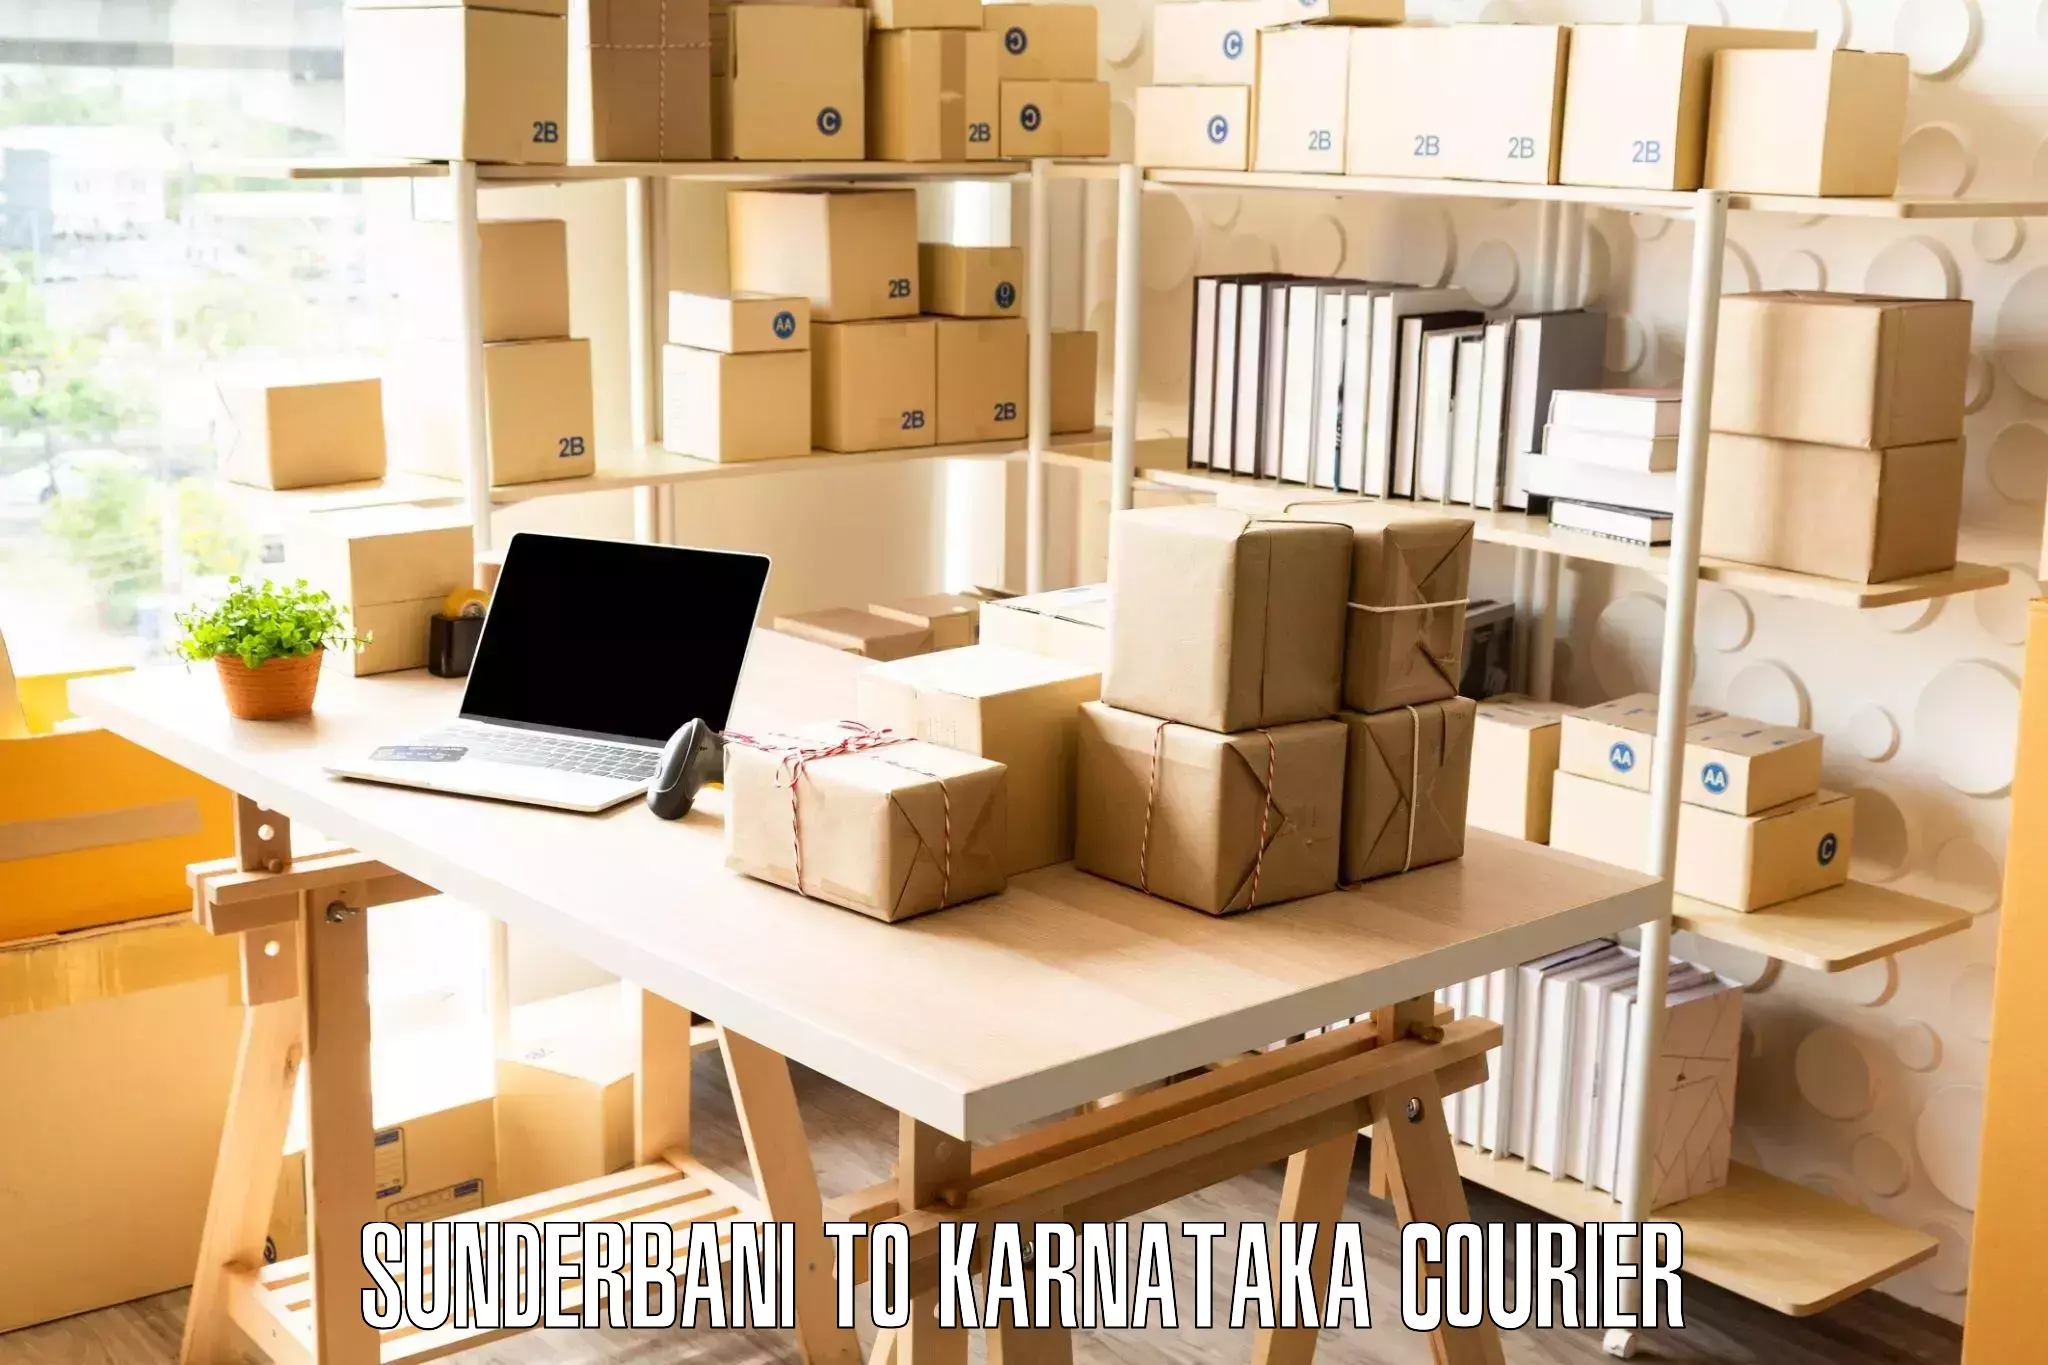 Efficient moving services in Sunderbani to Karnataka